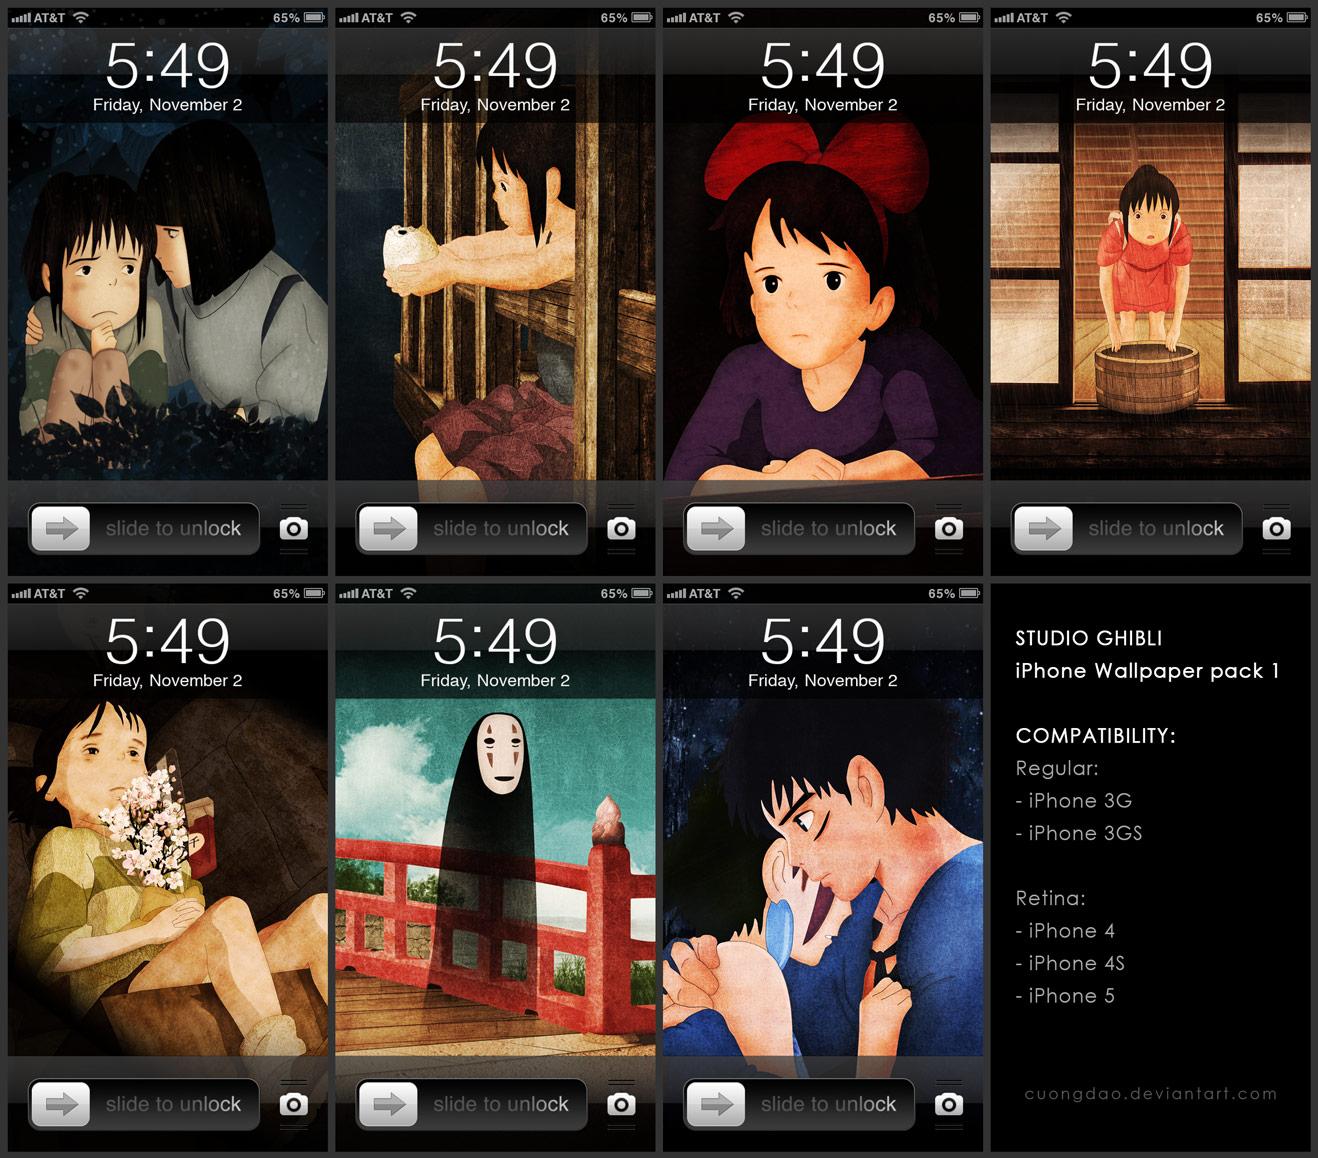 Studio Ghibli iPhone Wallpaper Pack By Cuongdao